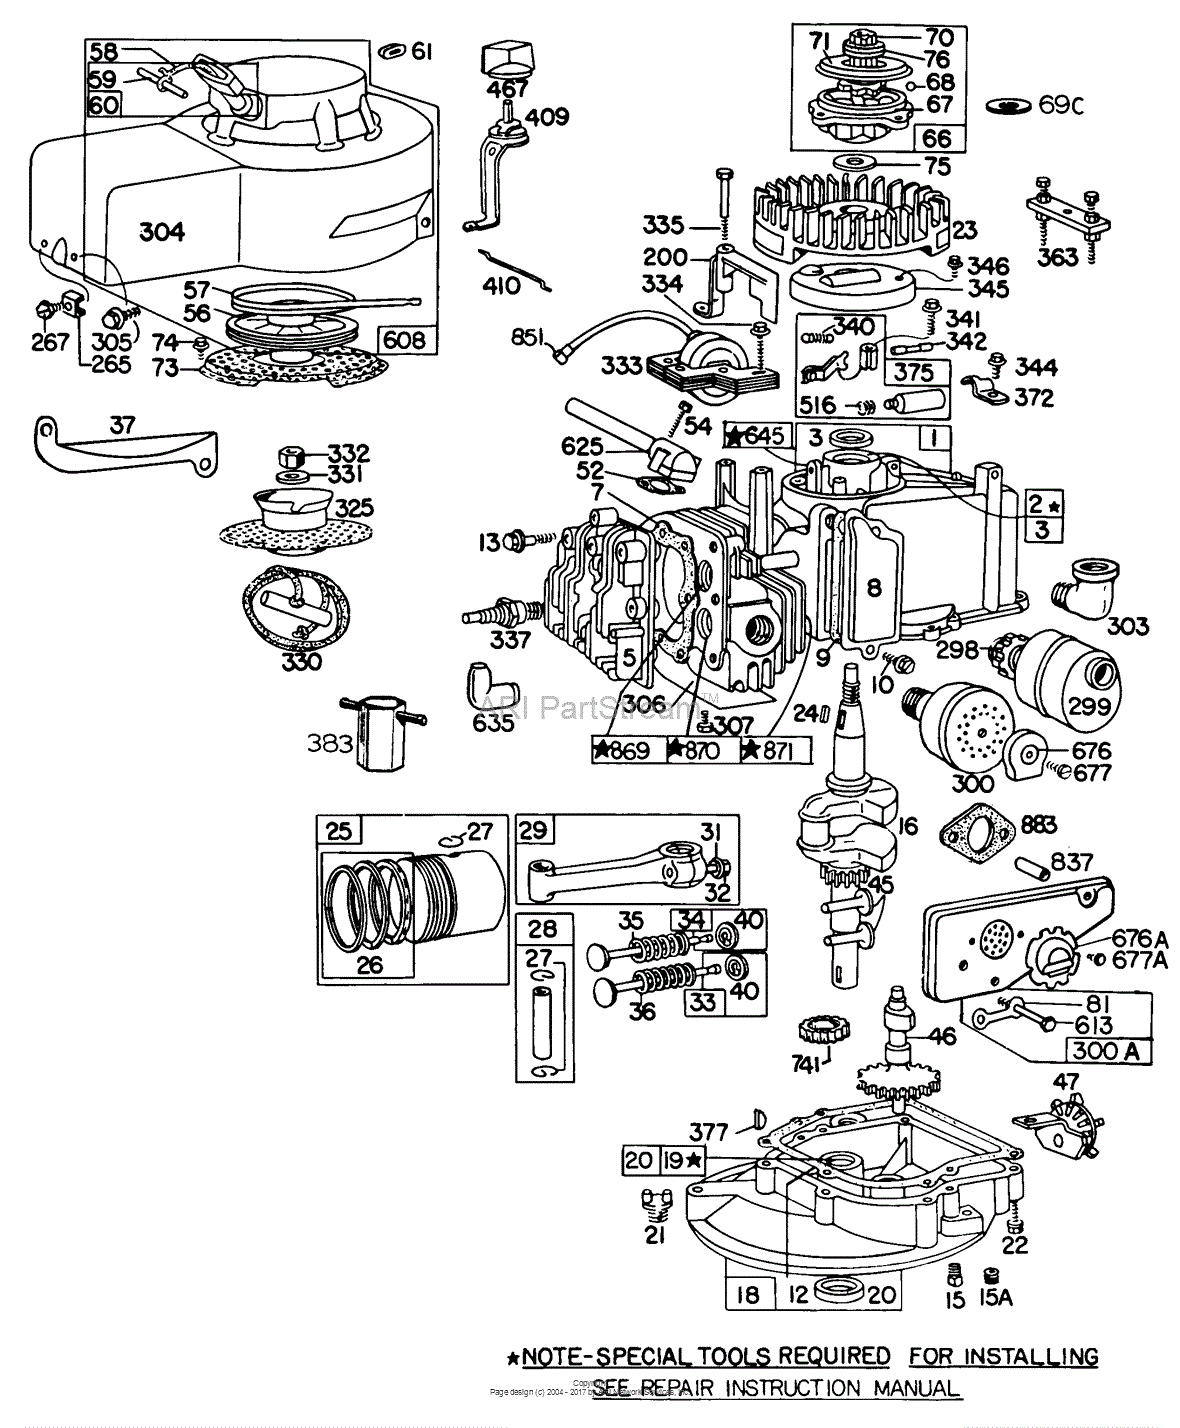 Briggs And Stratton 1150 Parts Diagram 10